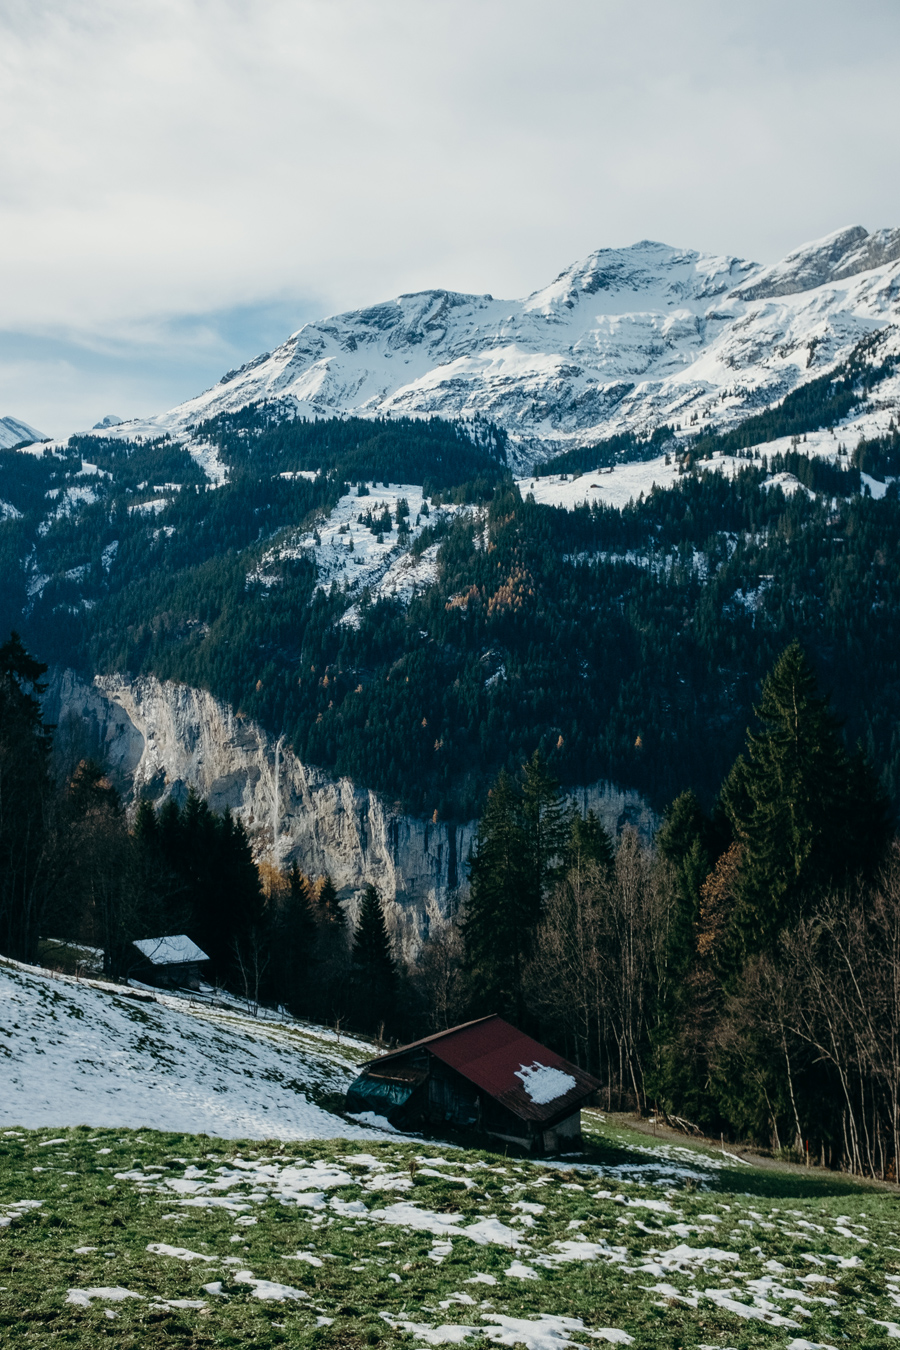 039-switzerland-mountains-snow-travel-photography.jpg